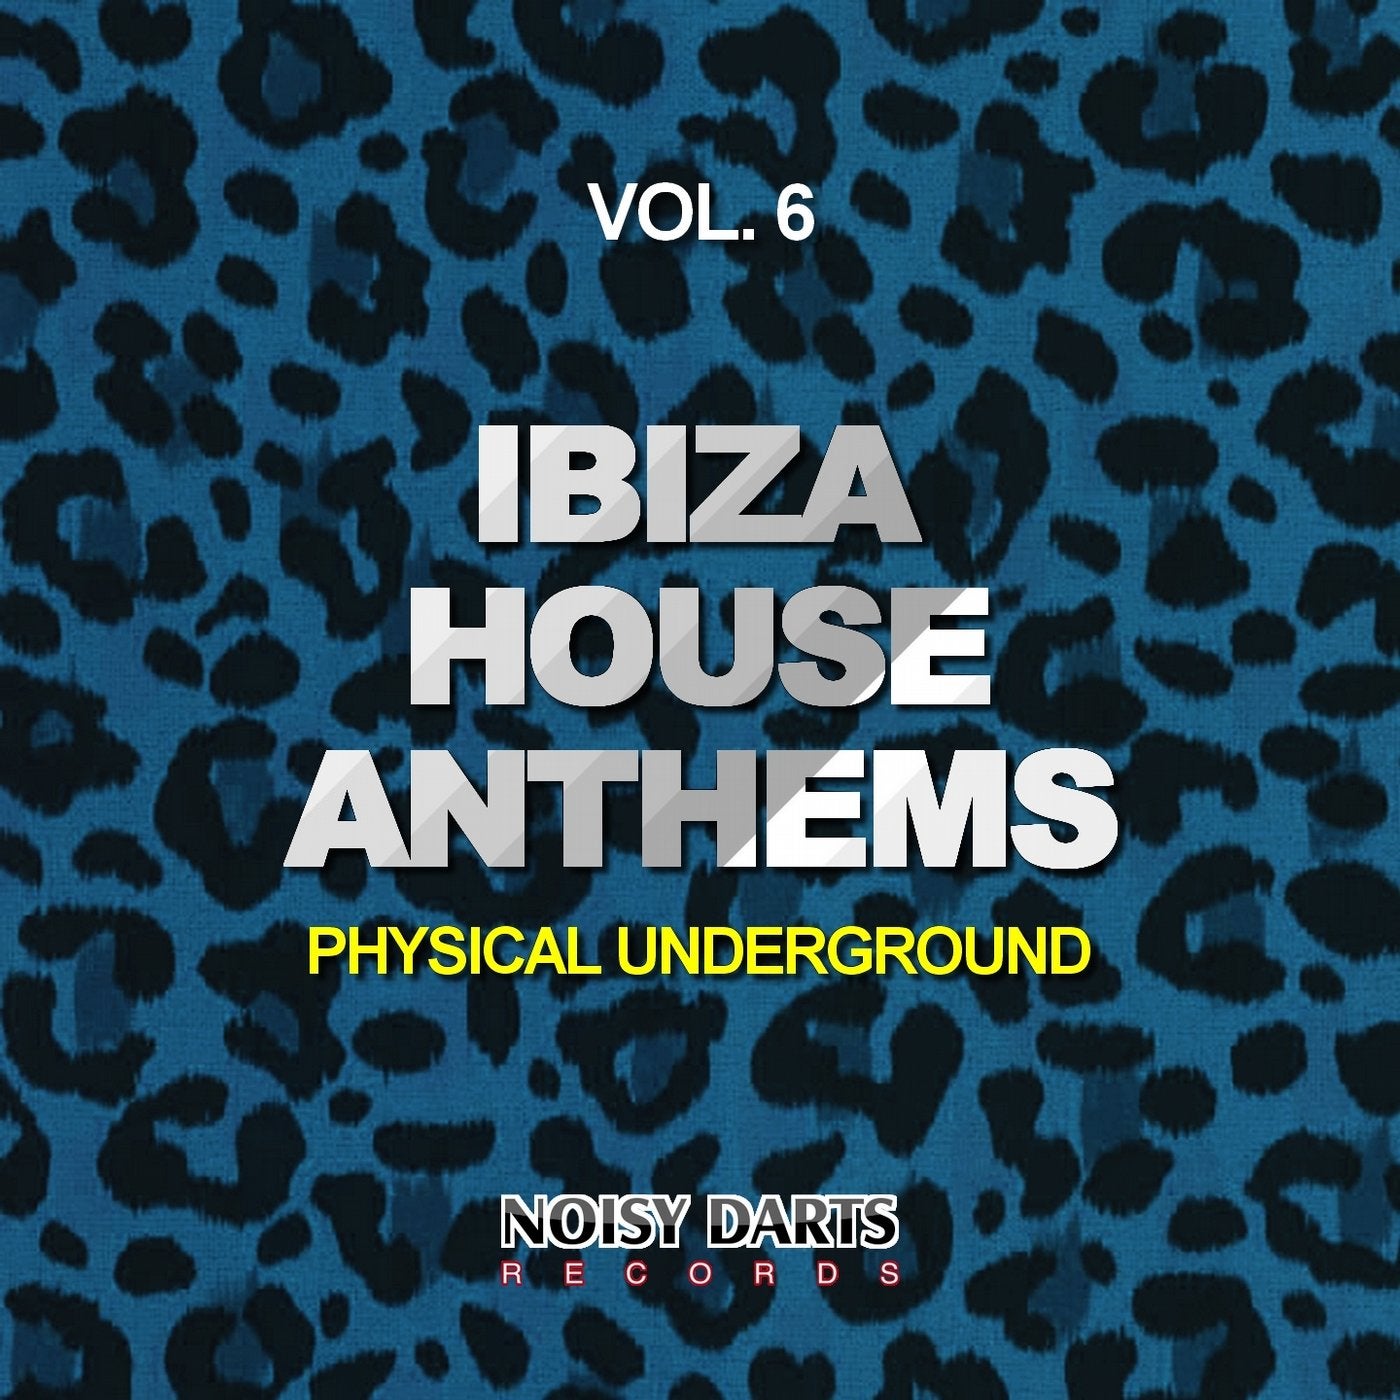 Ibiza House Anthems, Vol. 6 (Physical Underground)